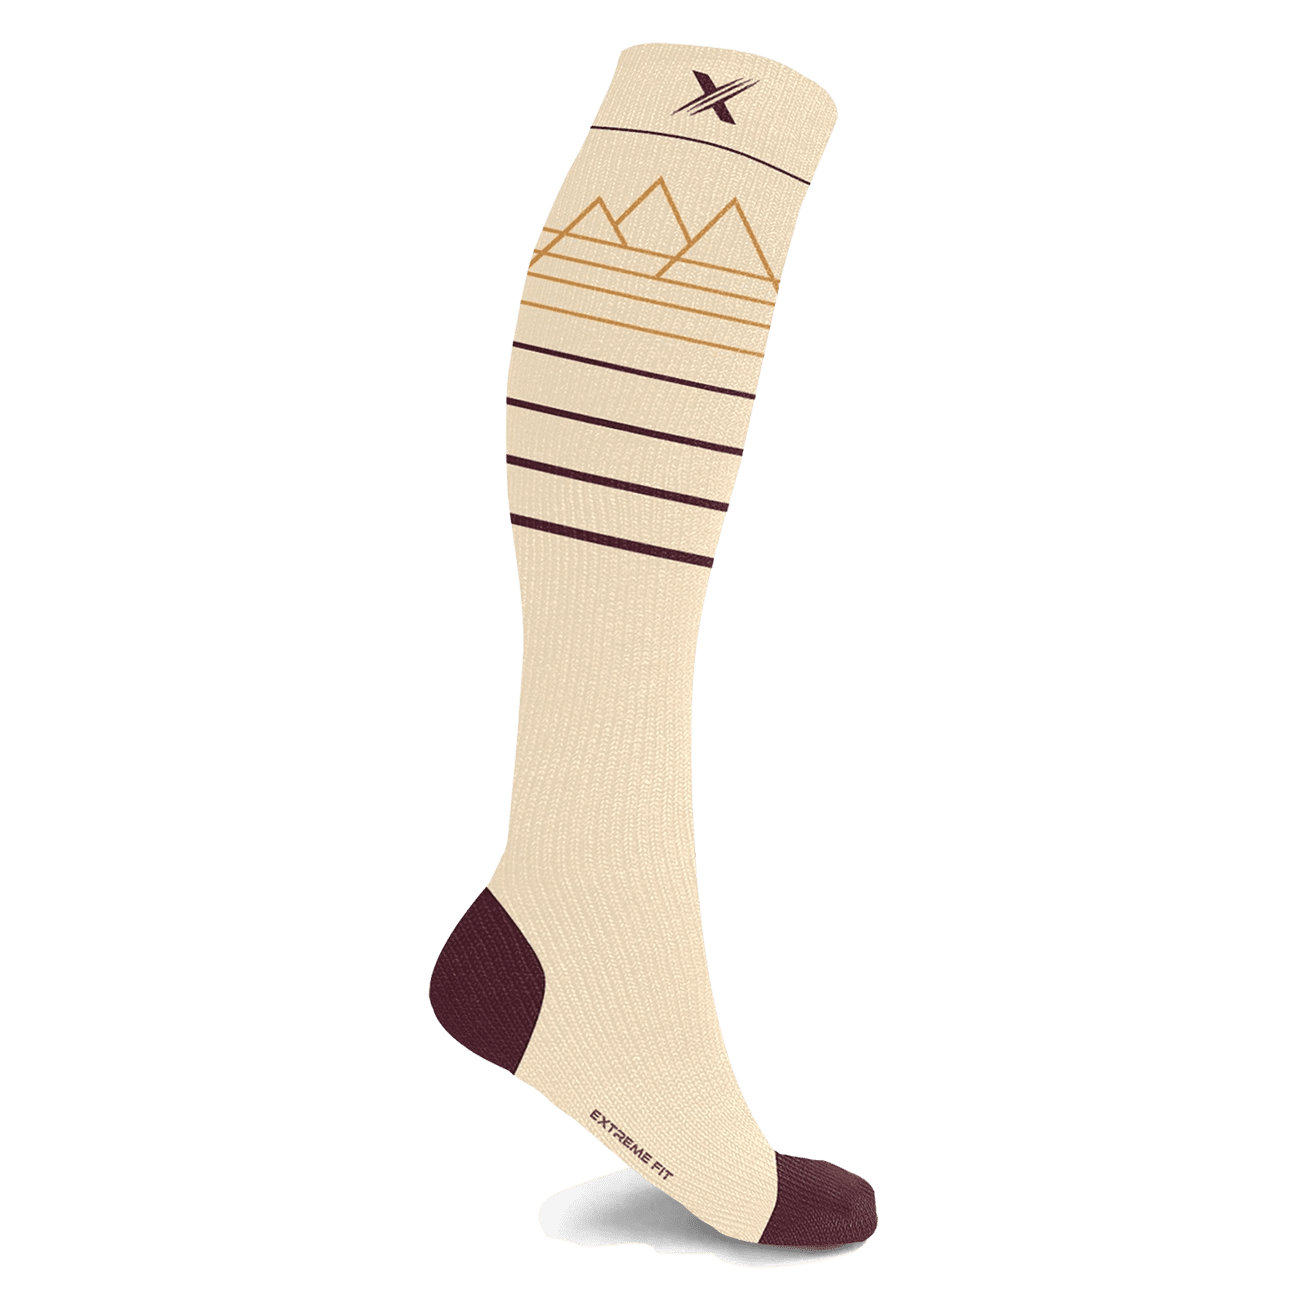 NV Compression Merino Wool Winter Long Compression Socks 